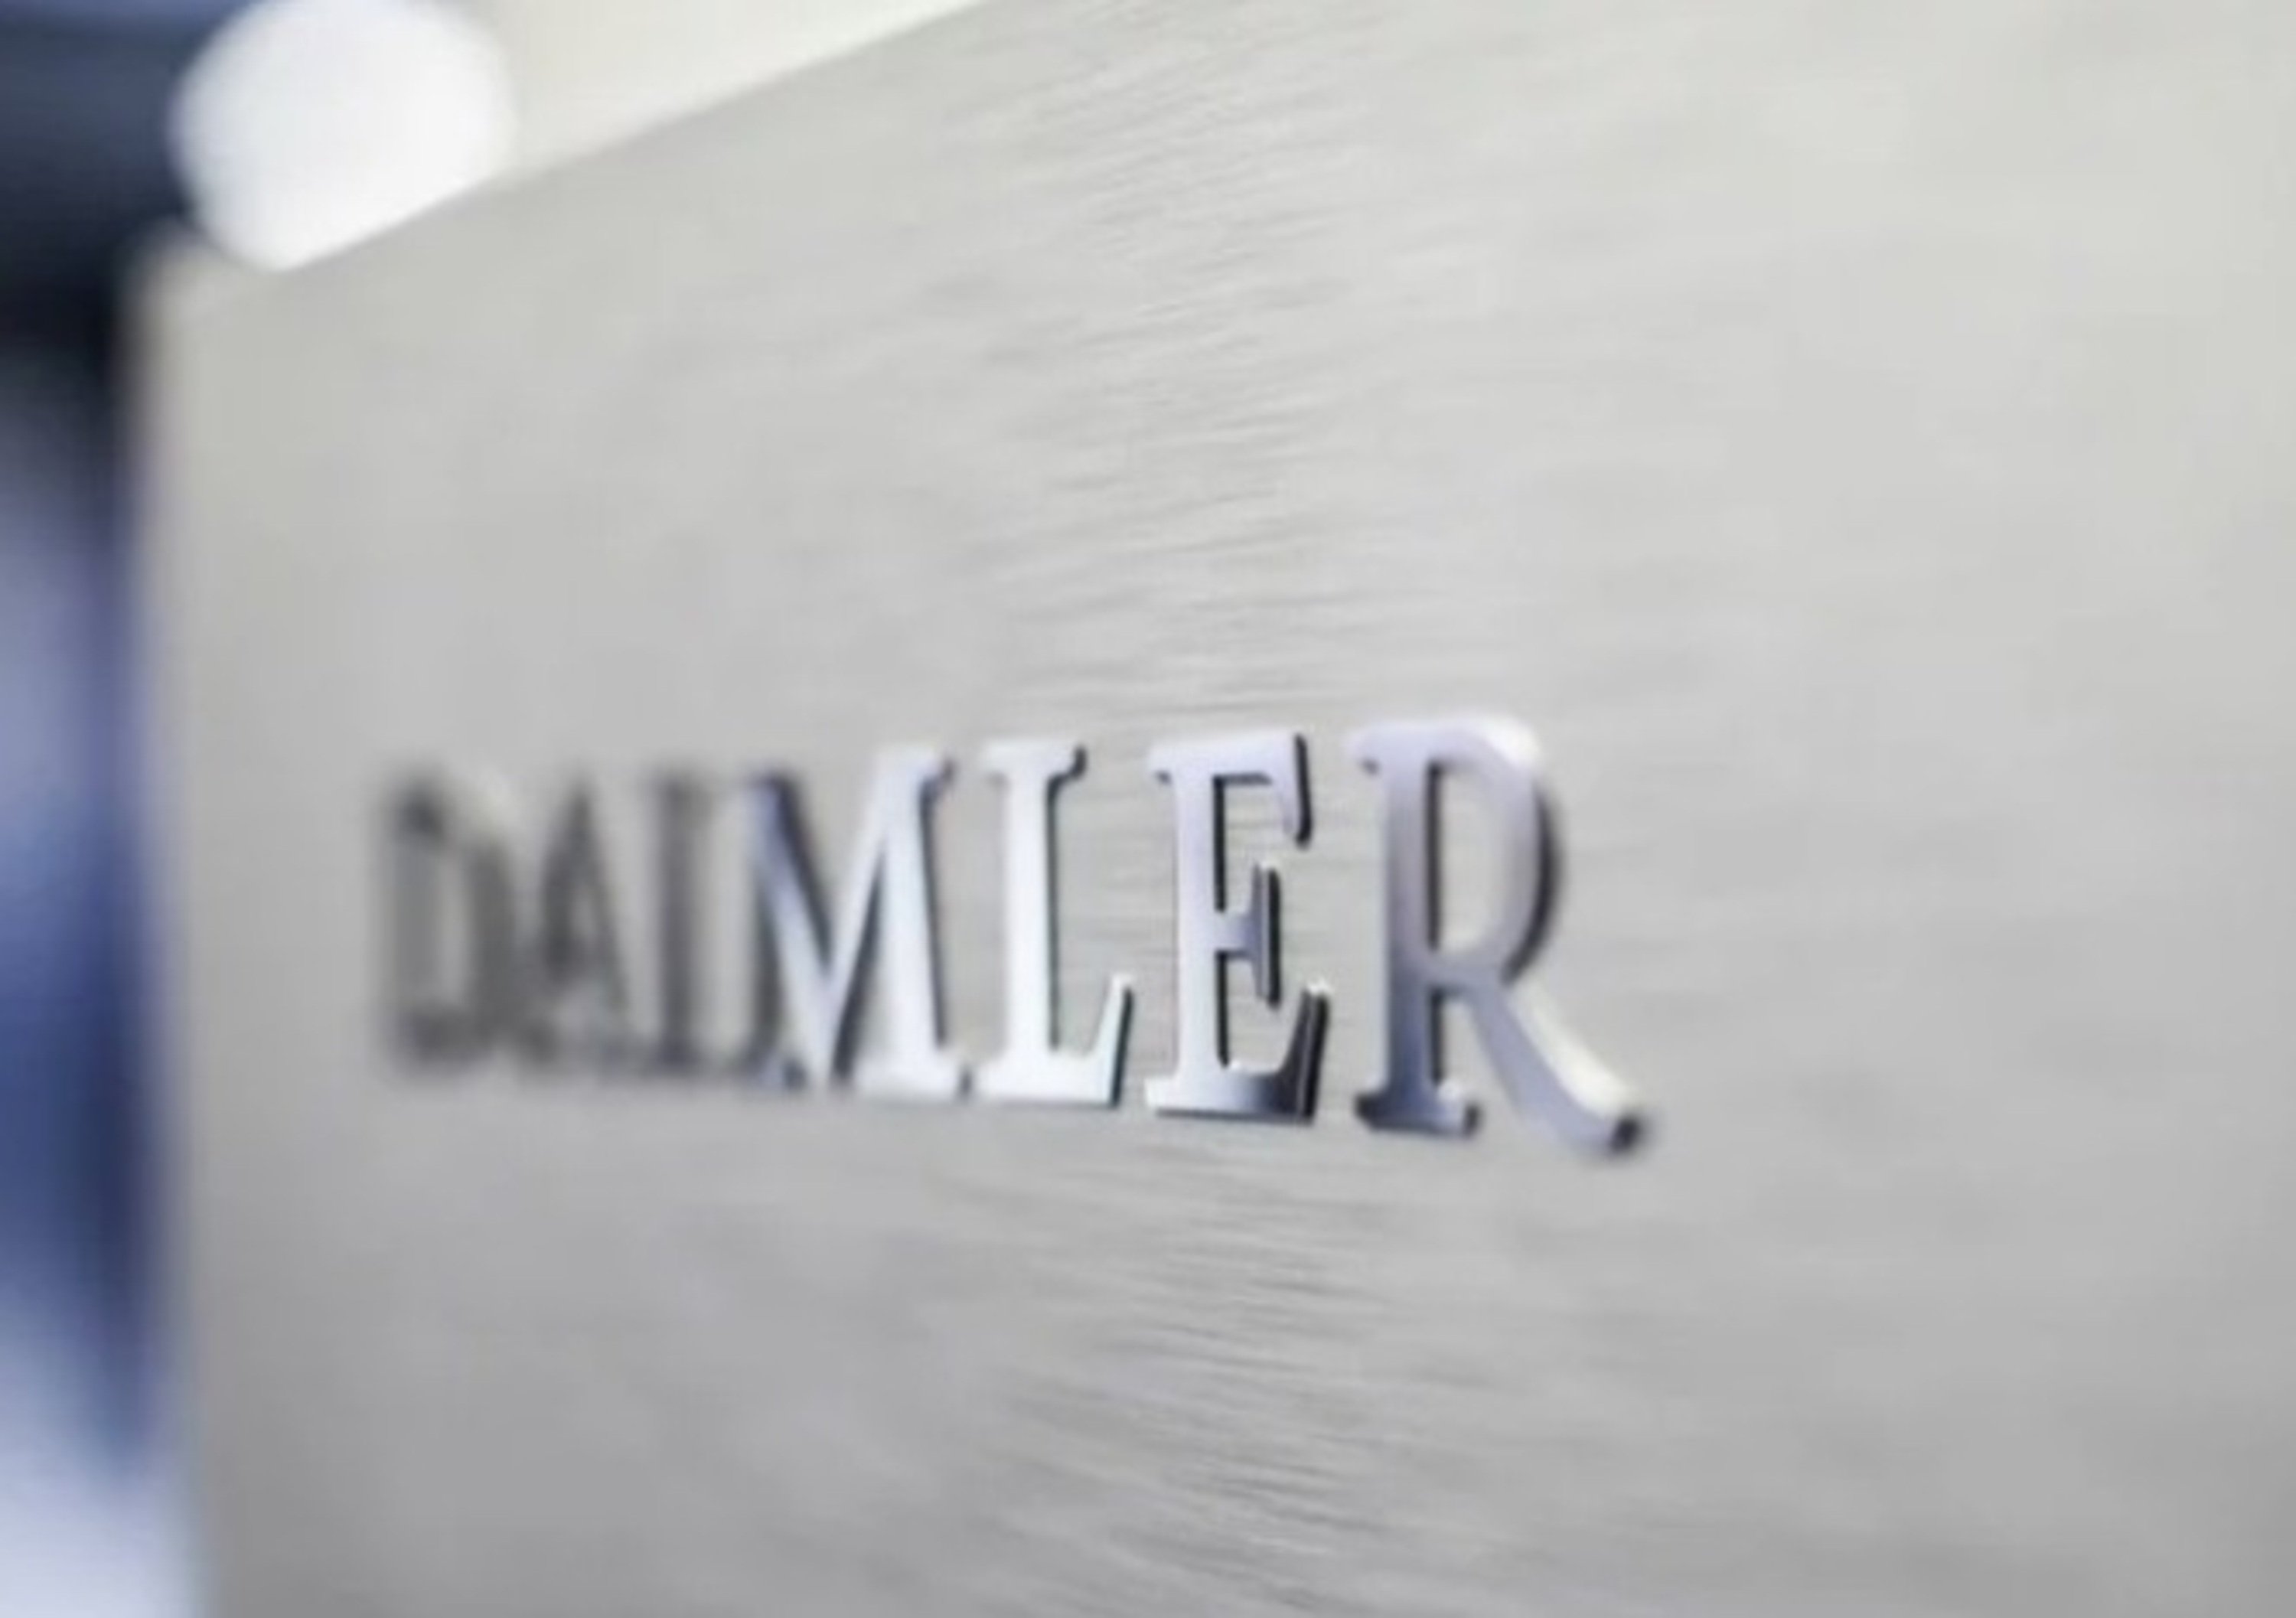 Daimler, la cinese BAIC acquisisce il 5%